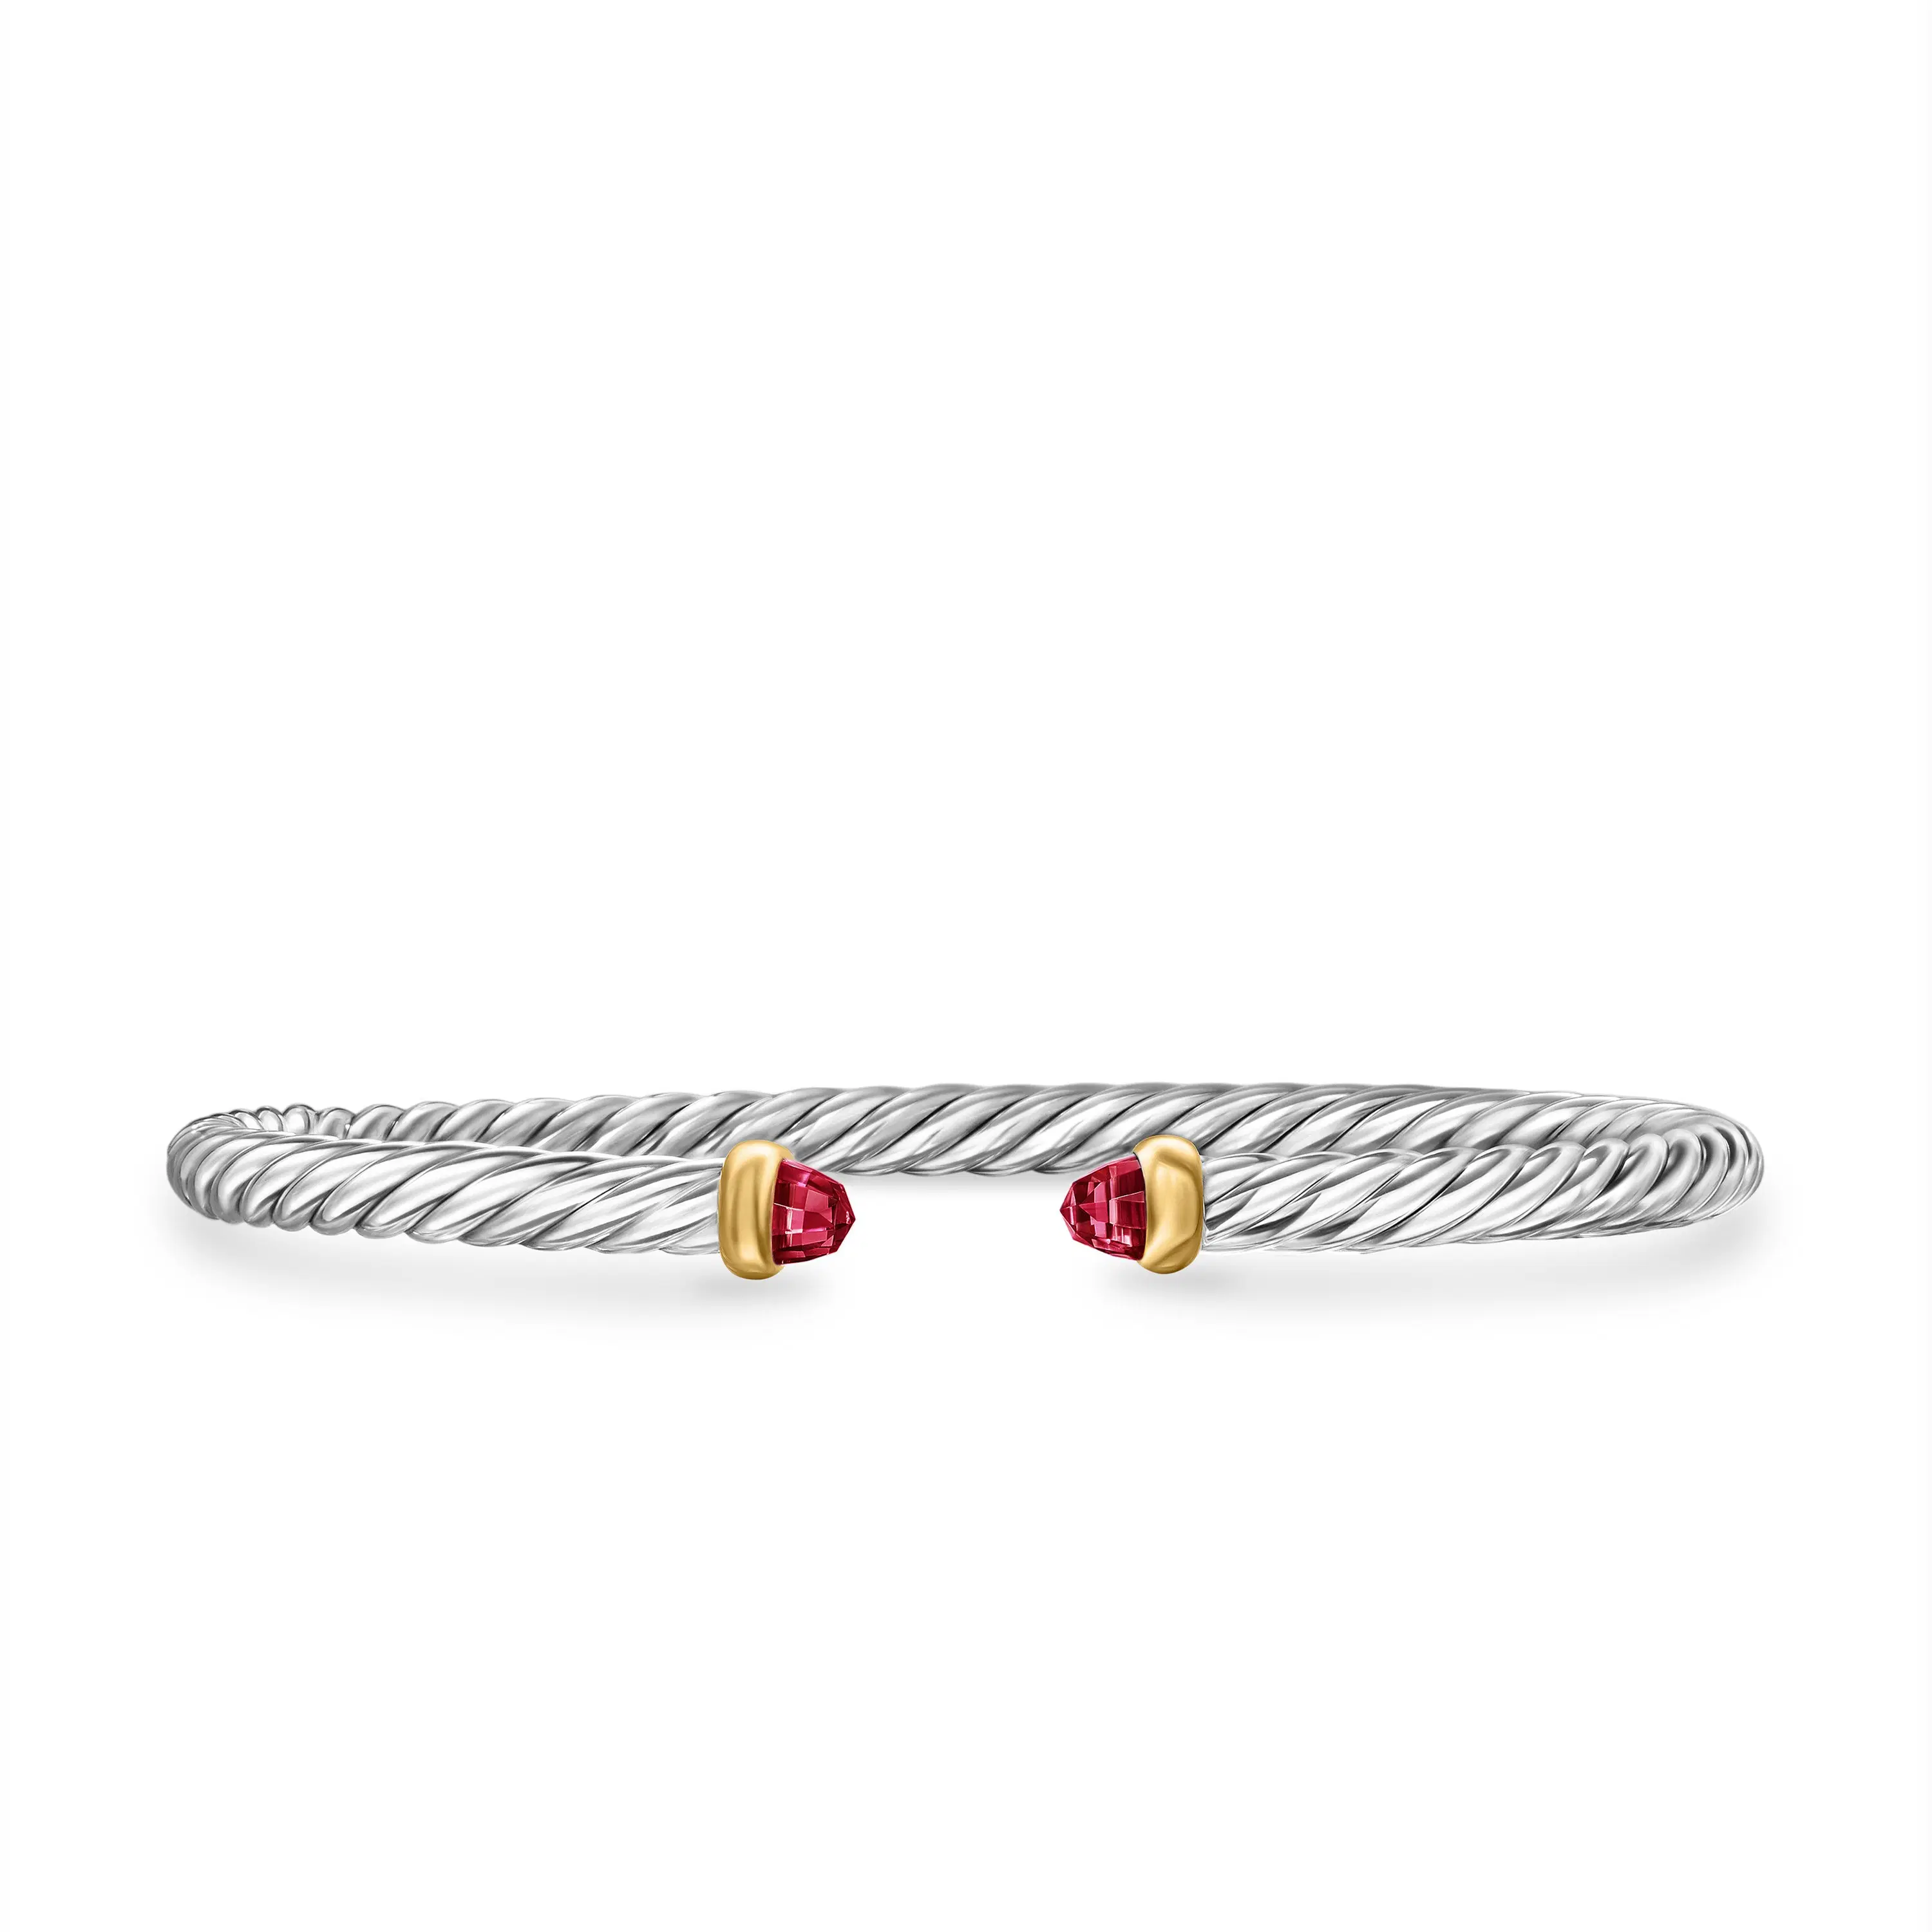 David Yurman Cable Flex Sterling Silver Bracelet with Garnet, Size Large